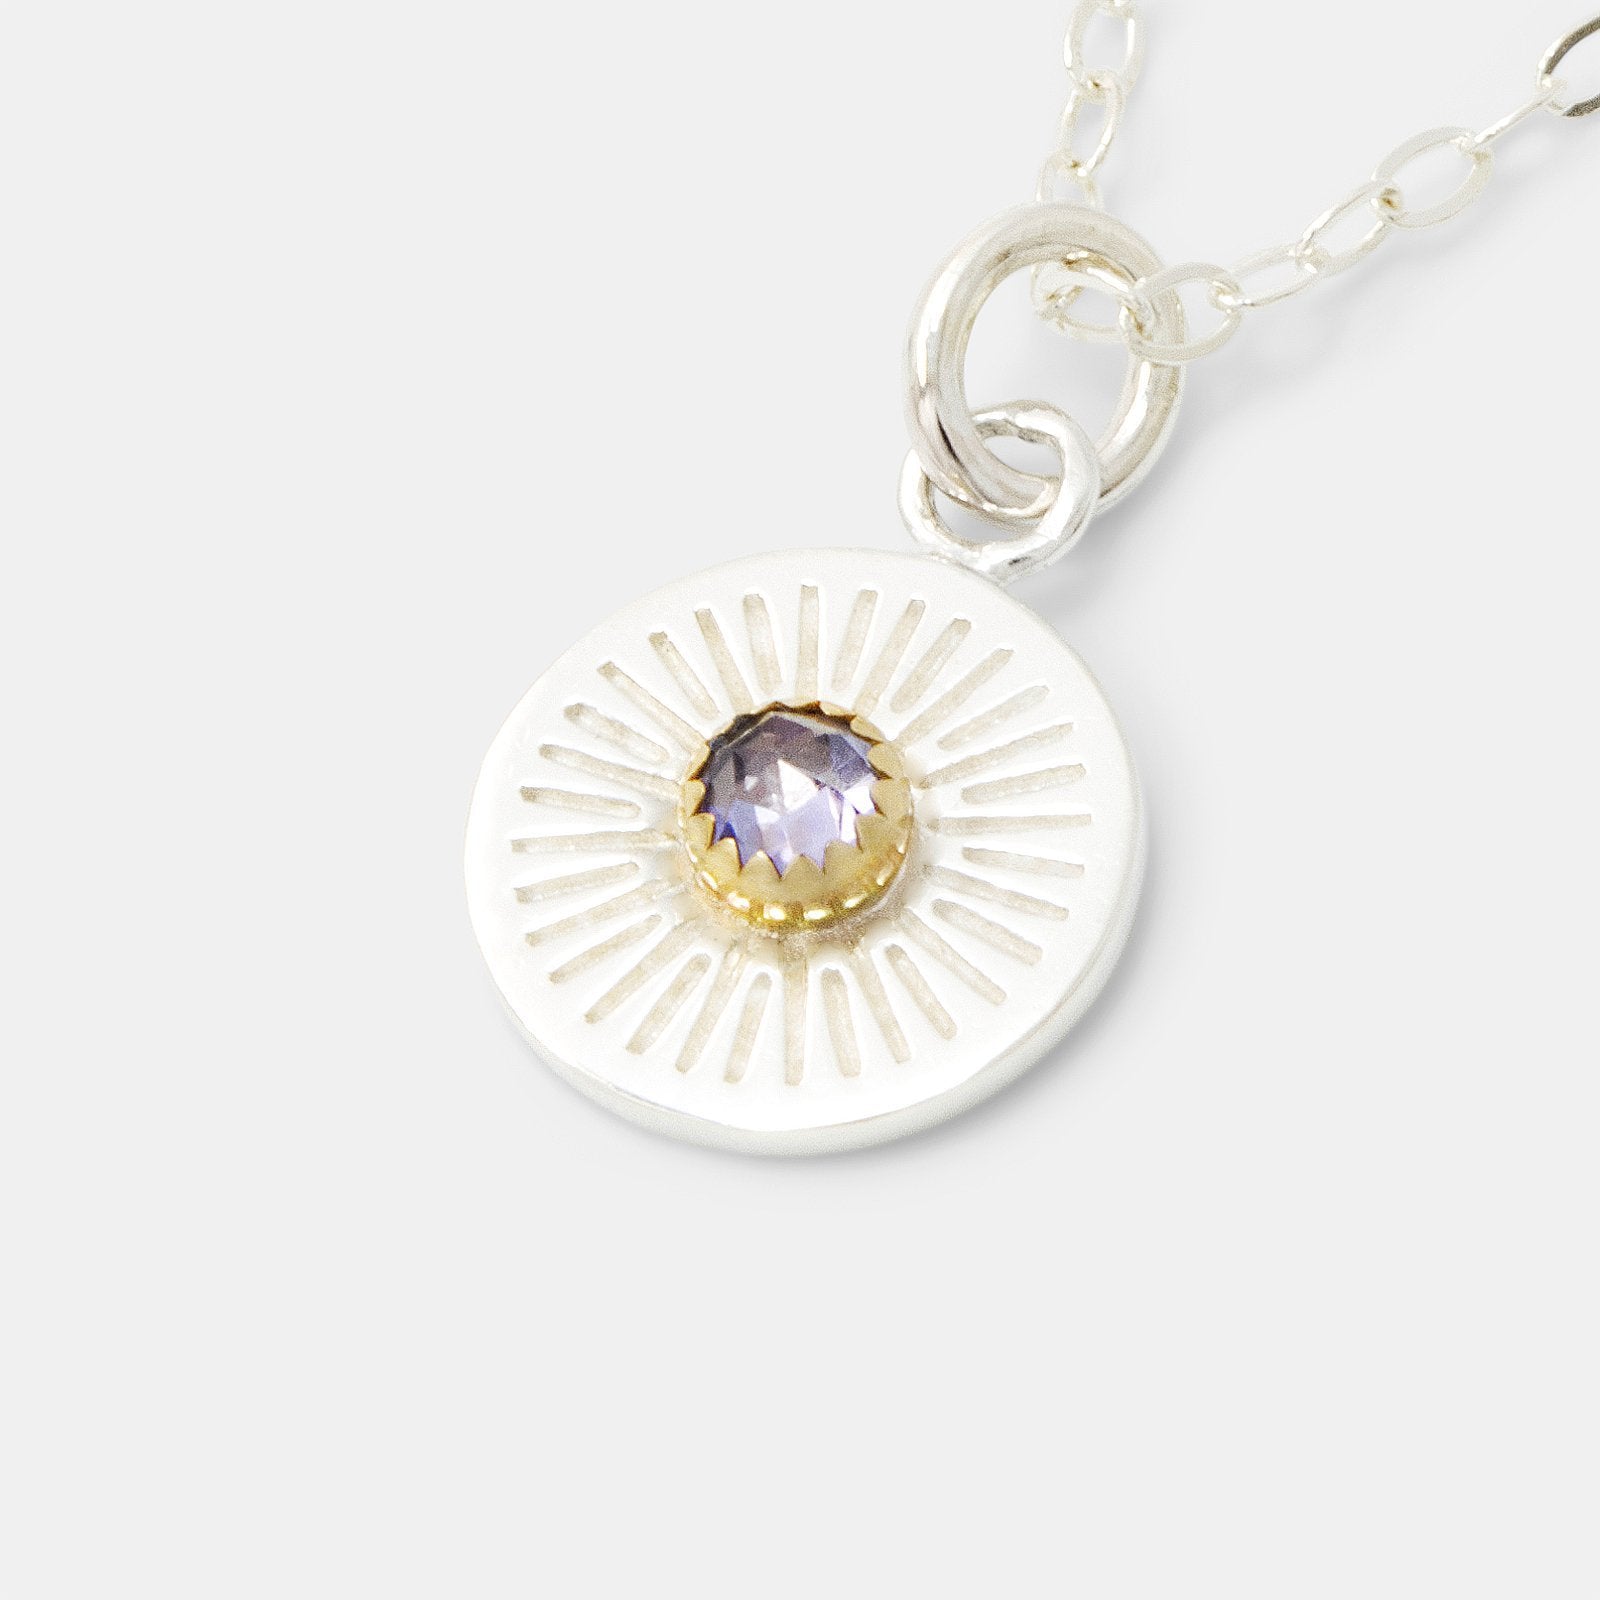 Birthstone pendant: tanzanite - Simone Walsh Jewellery Australia